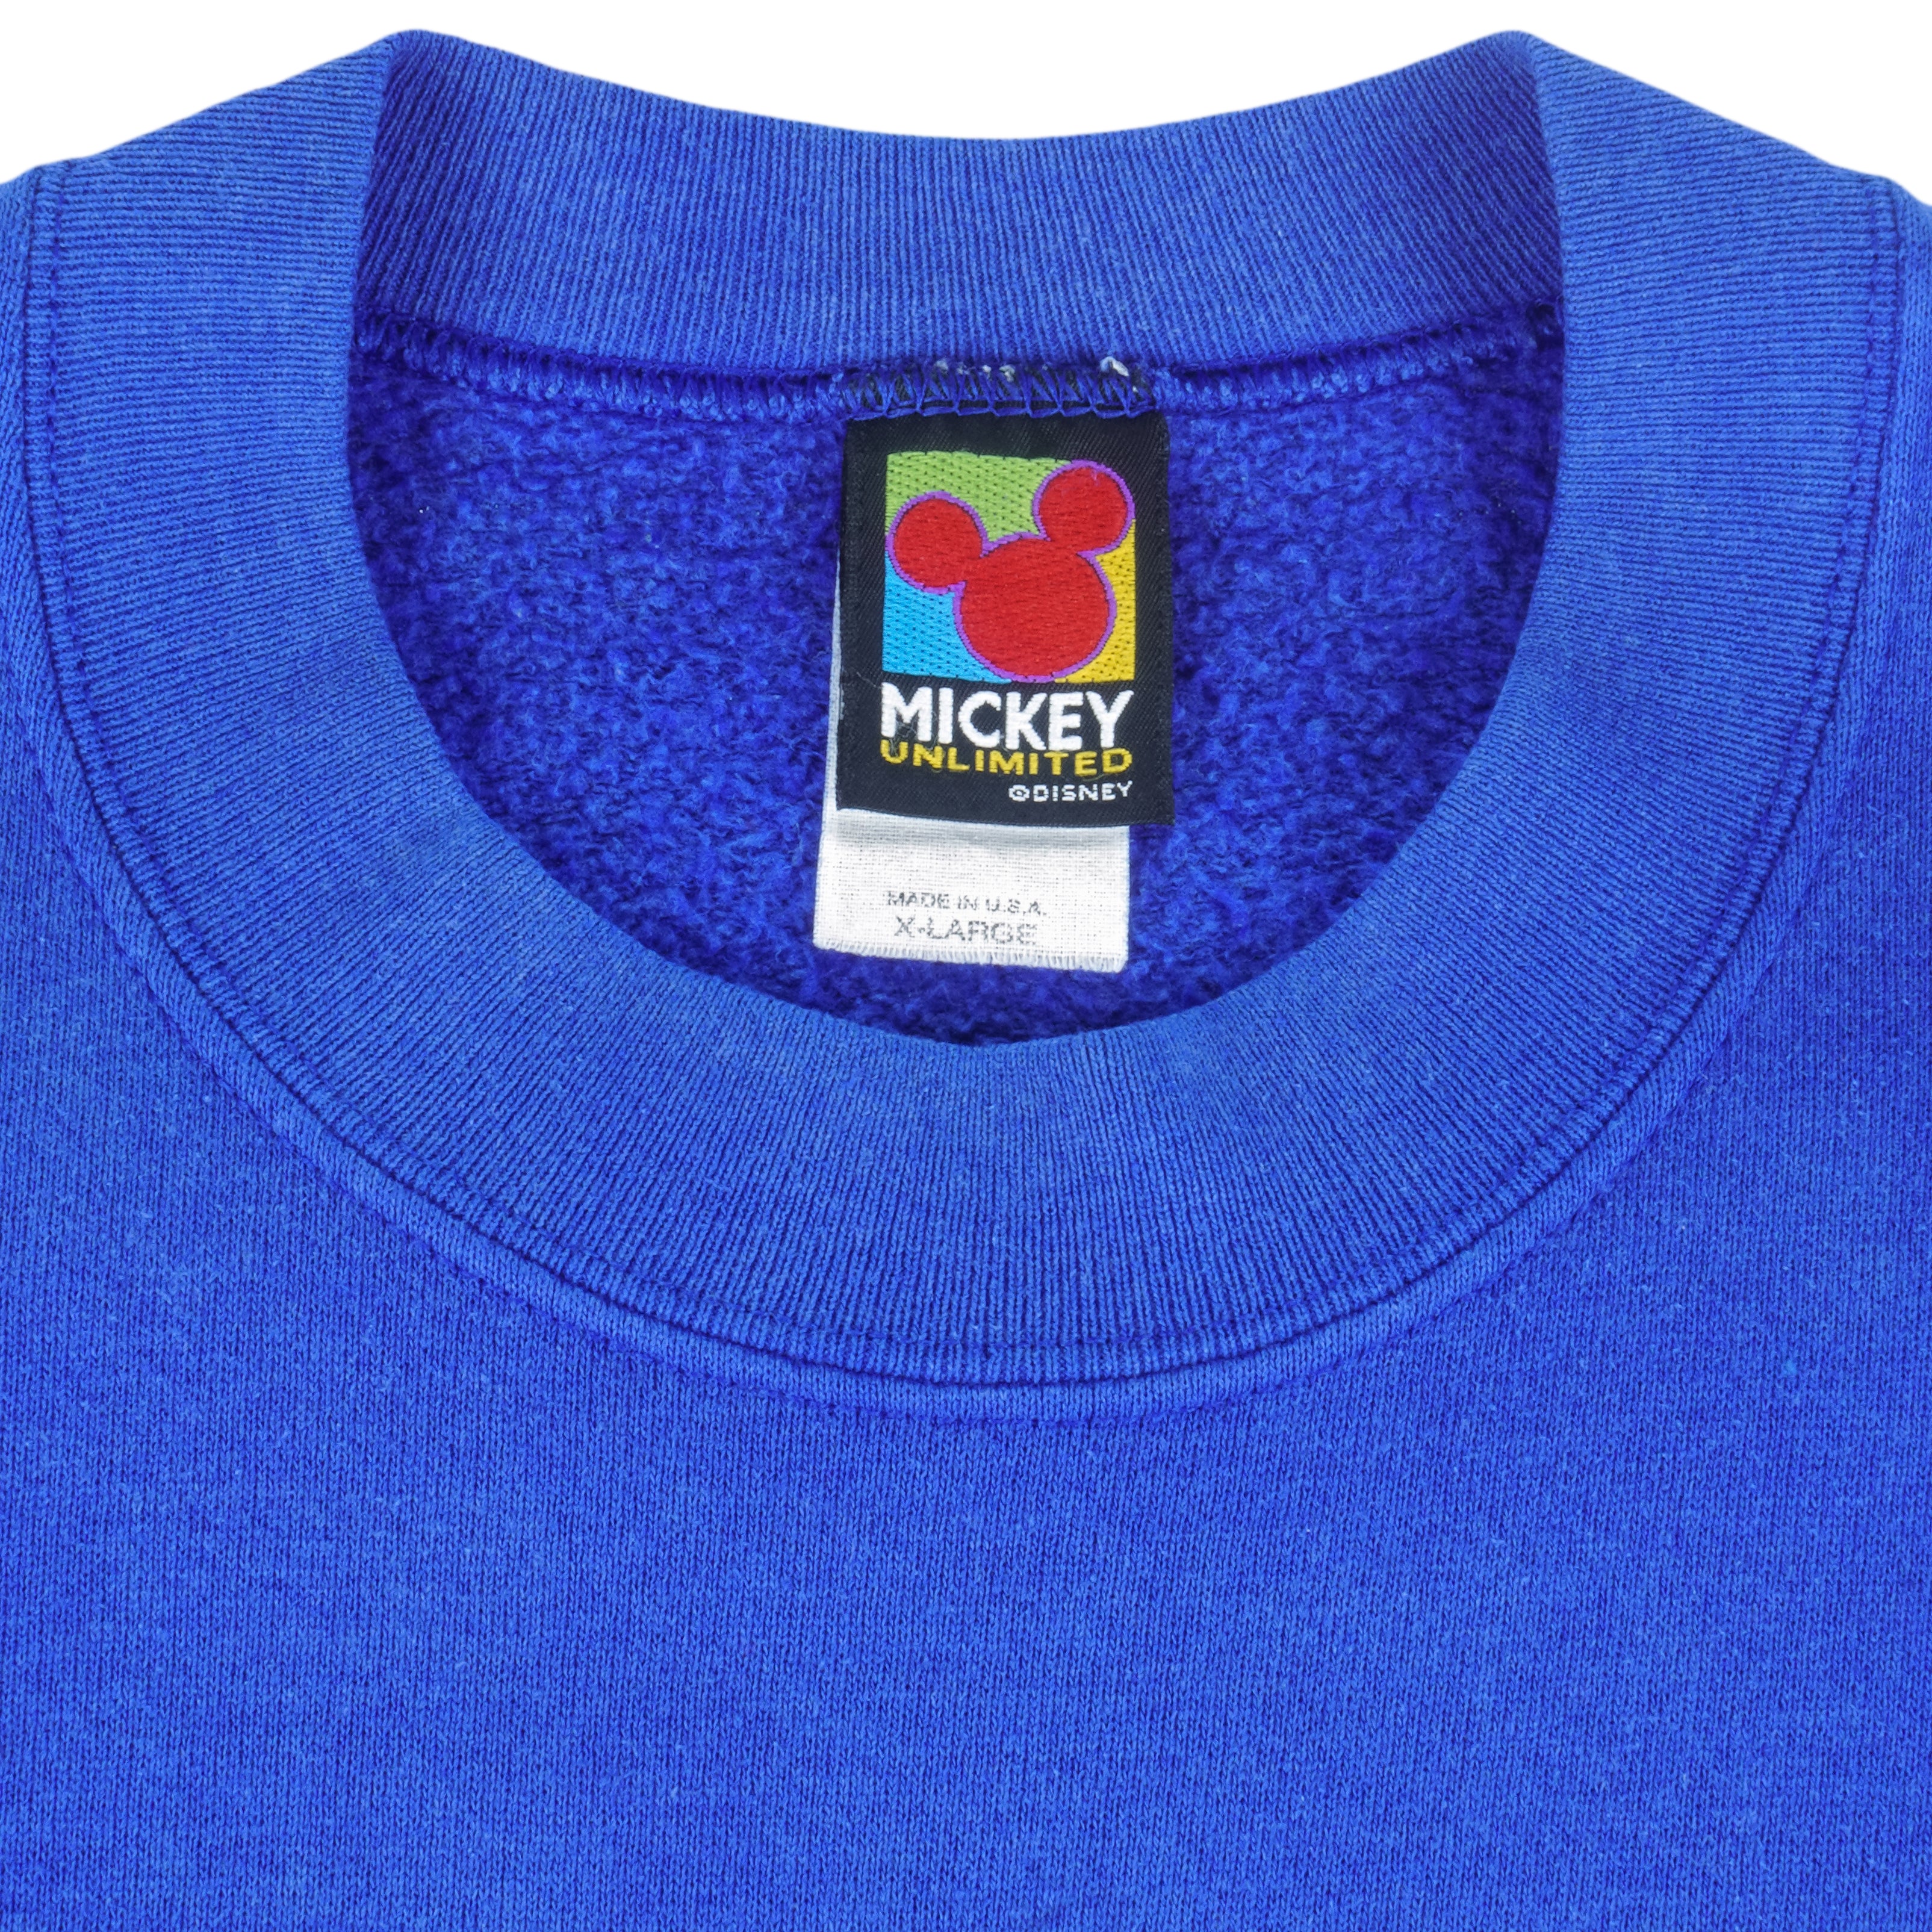 Mickey Mouse St Louis Cardinals Football Hoodie T-shirt Sweatshirt